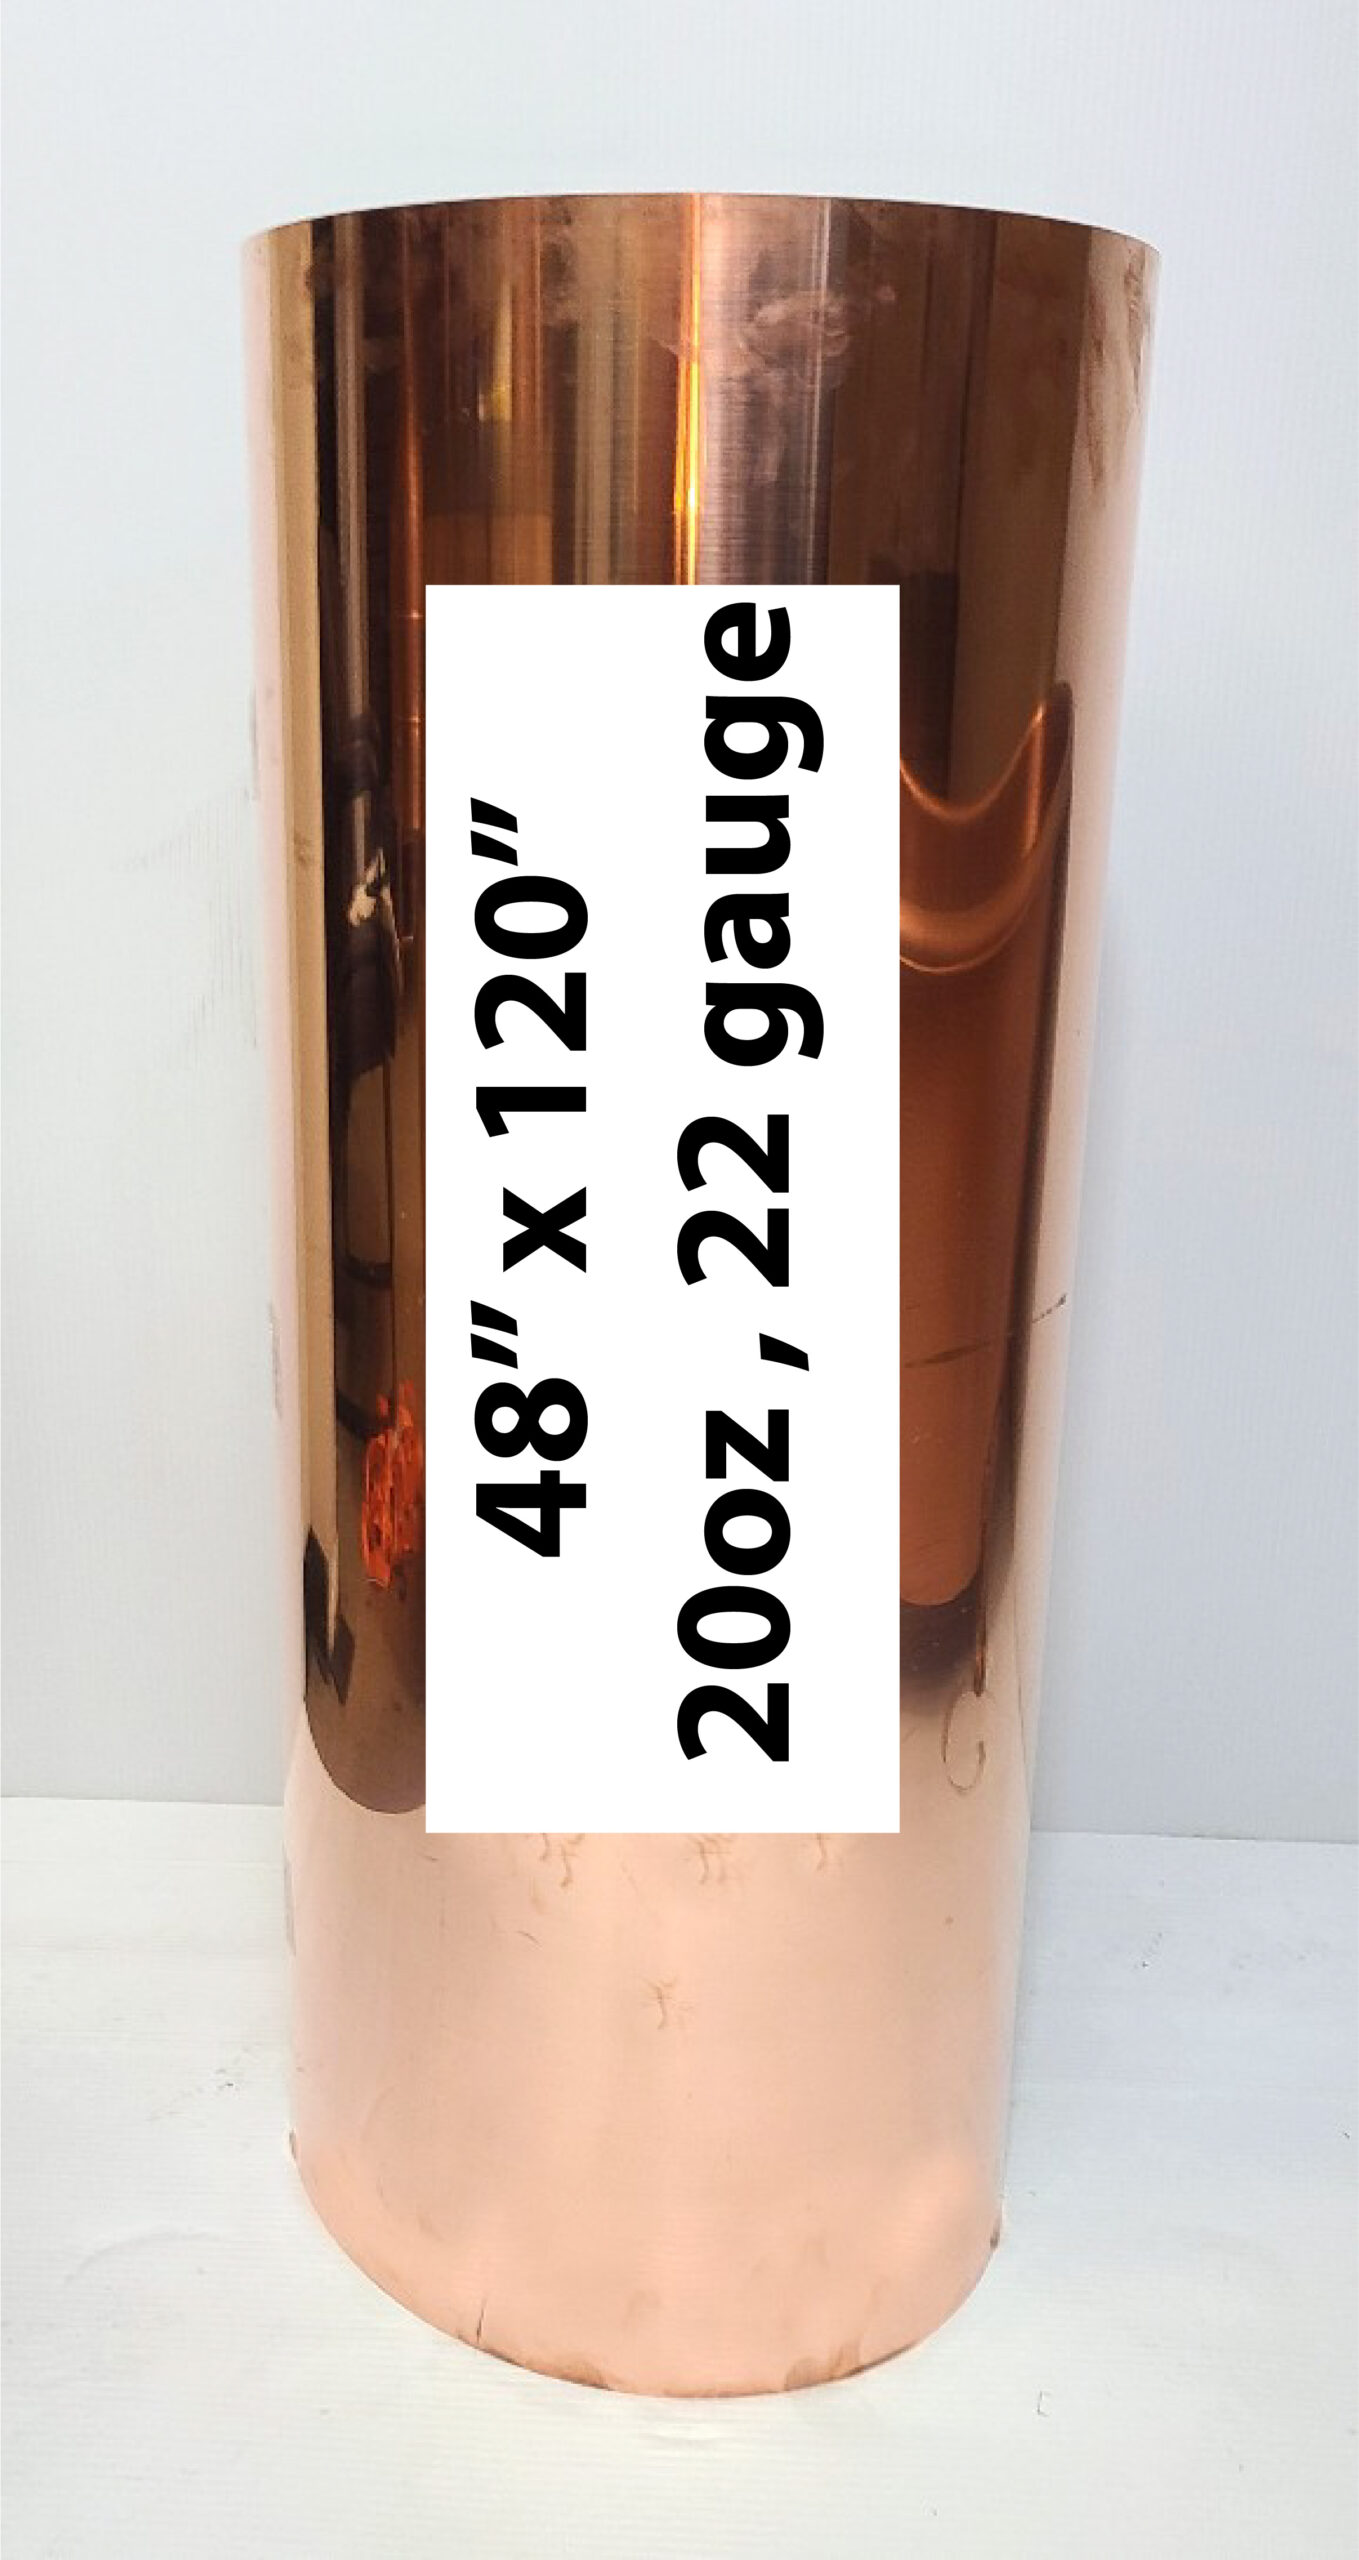 Prime 110 Copper Sheet - .021 X 24 X 36